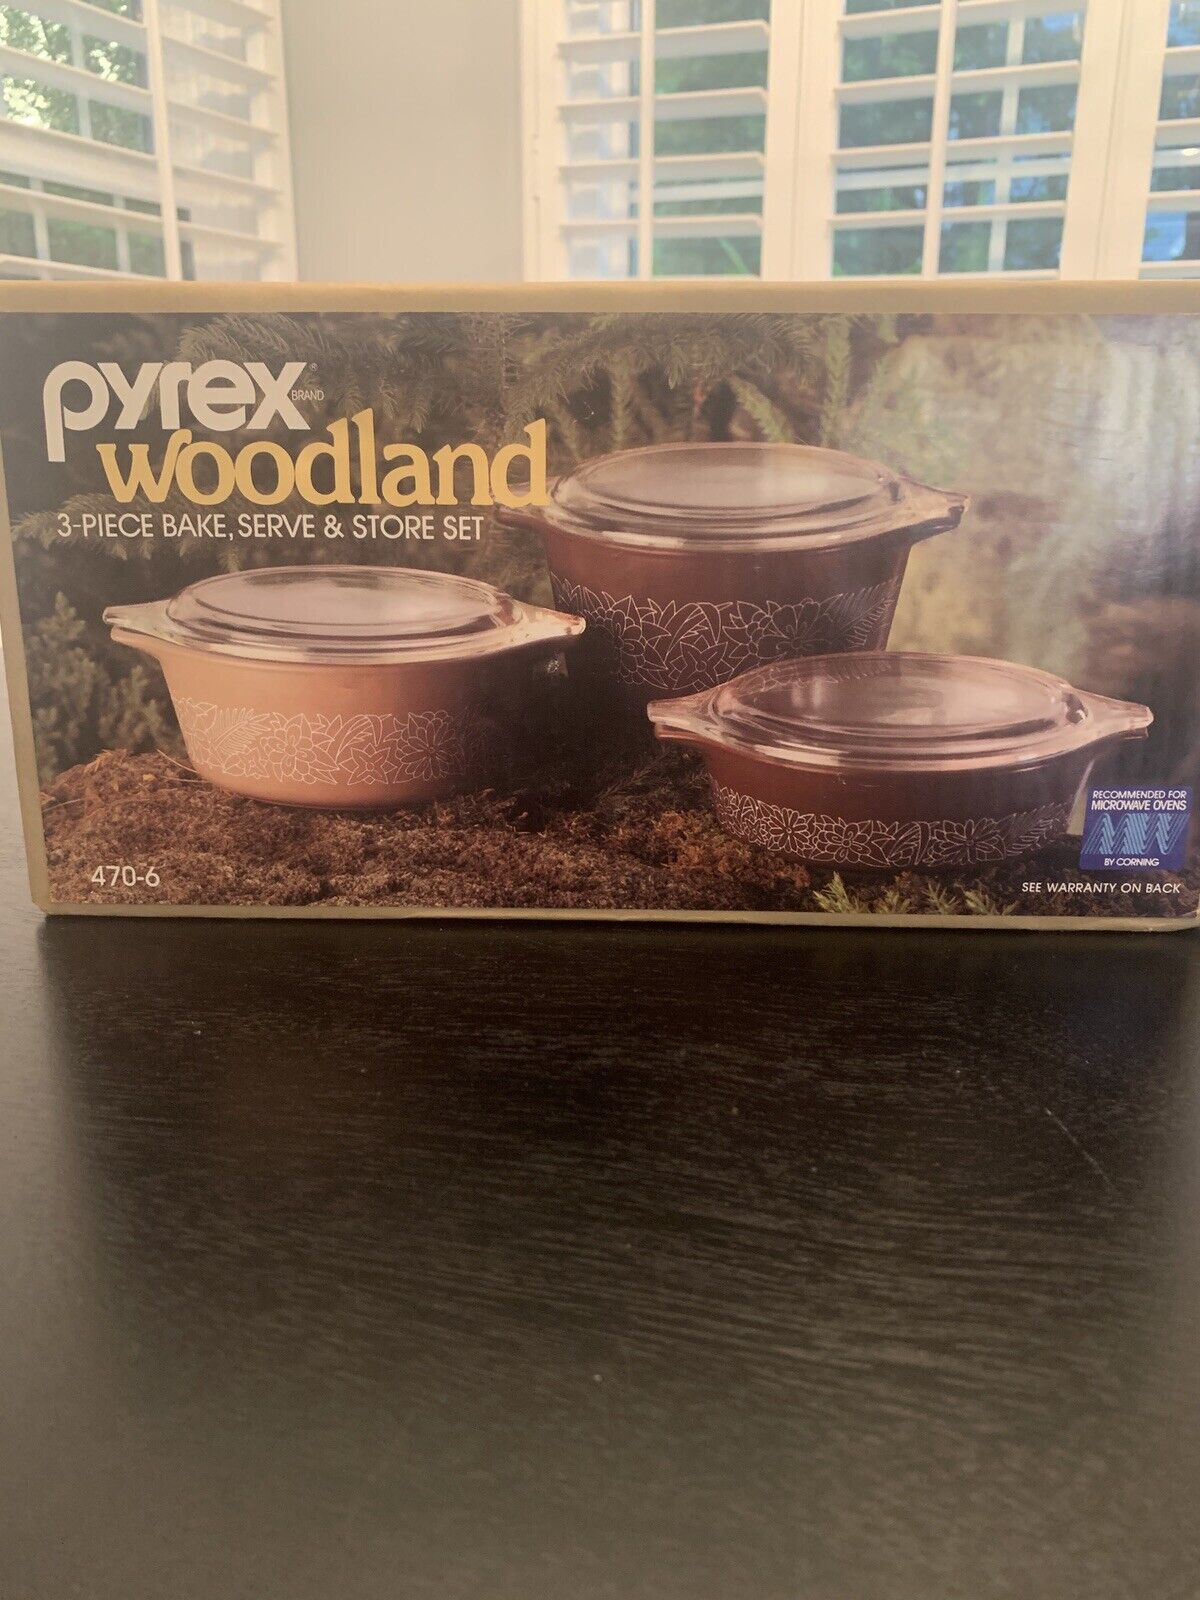 Pyrex Woodland Bake Serve & Store Set 470-6 Corning Vintage with original box.